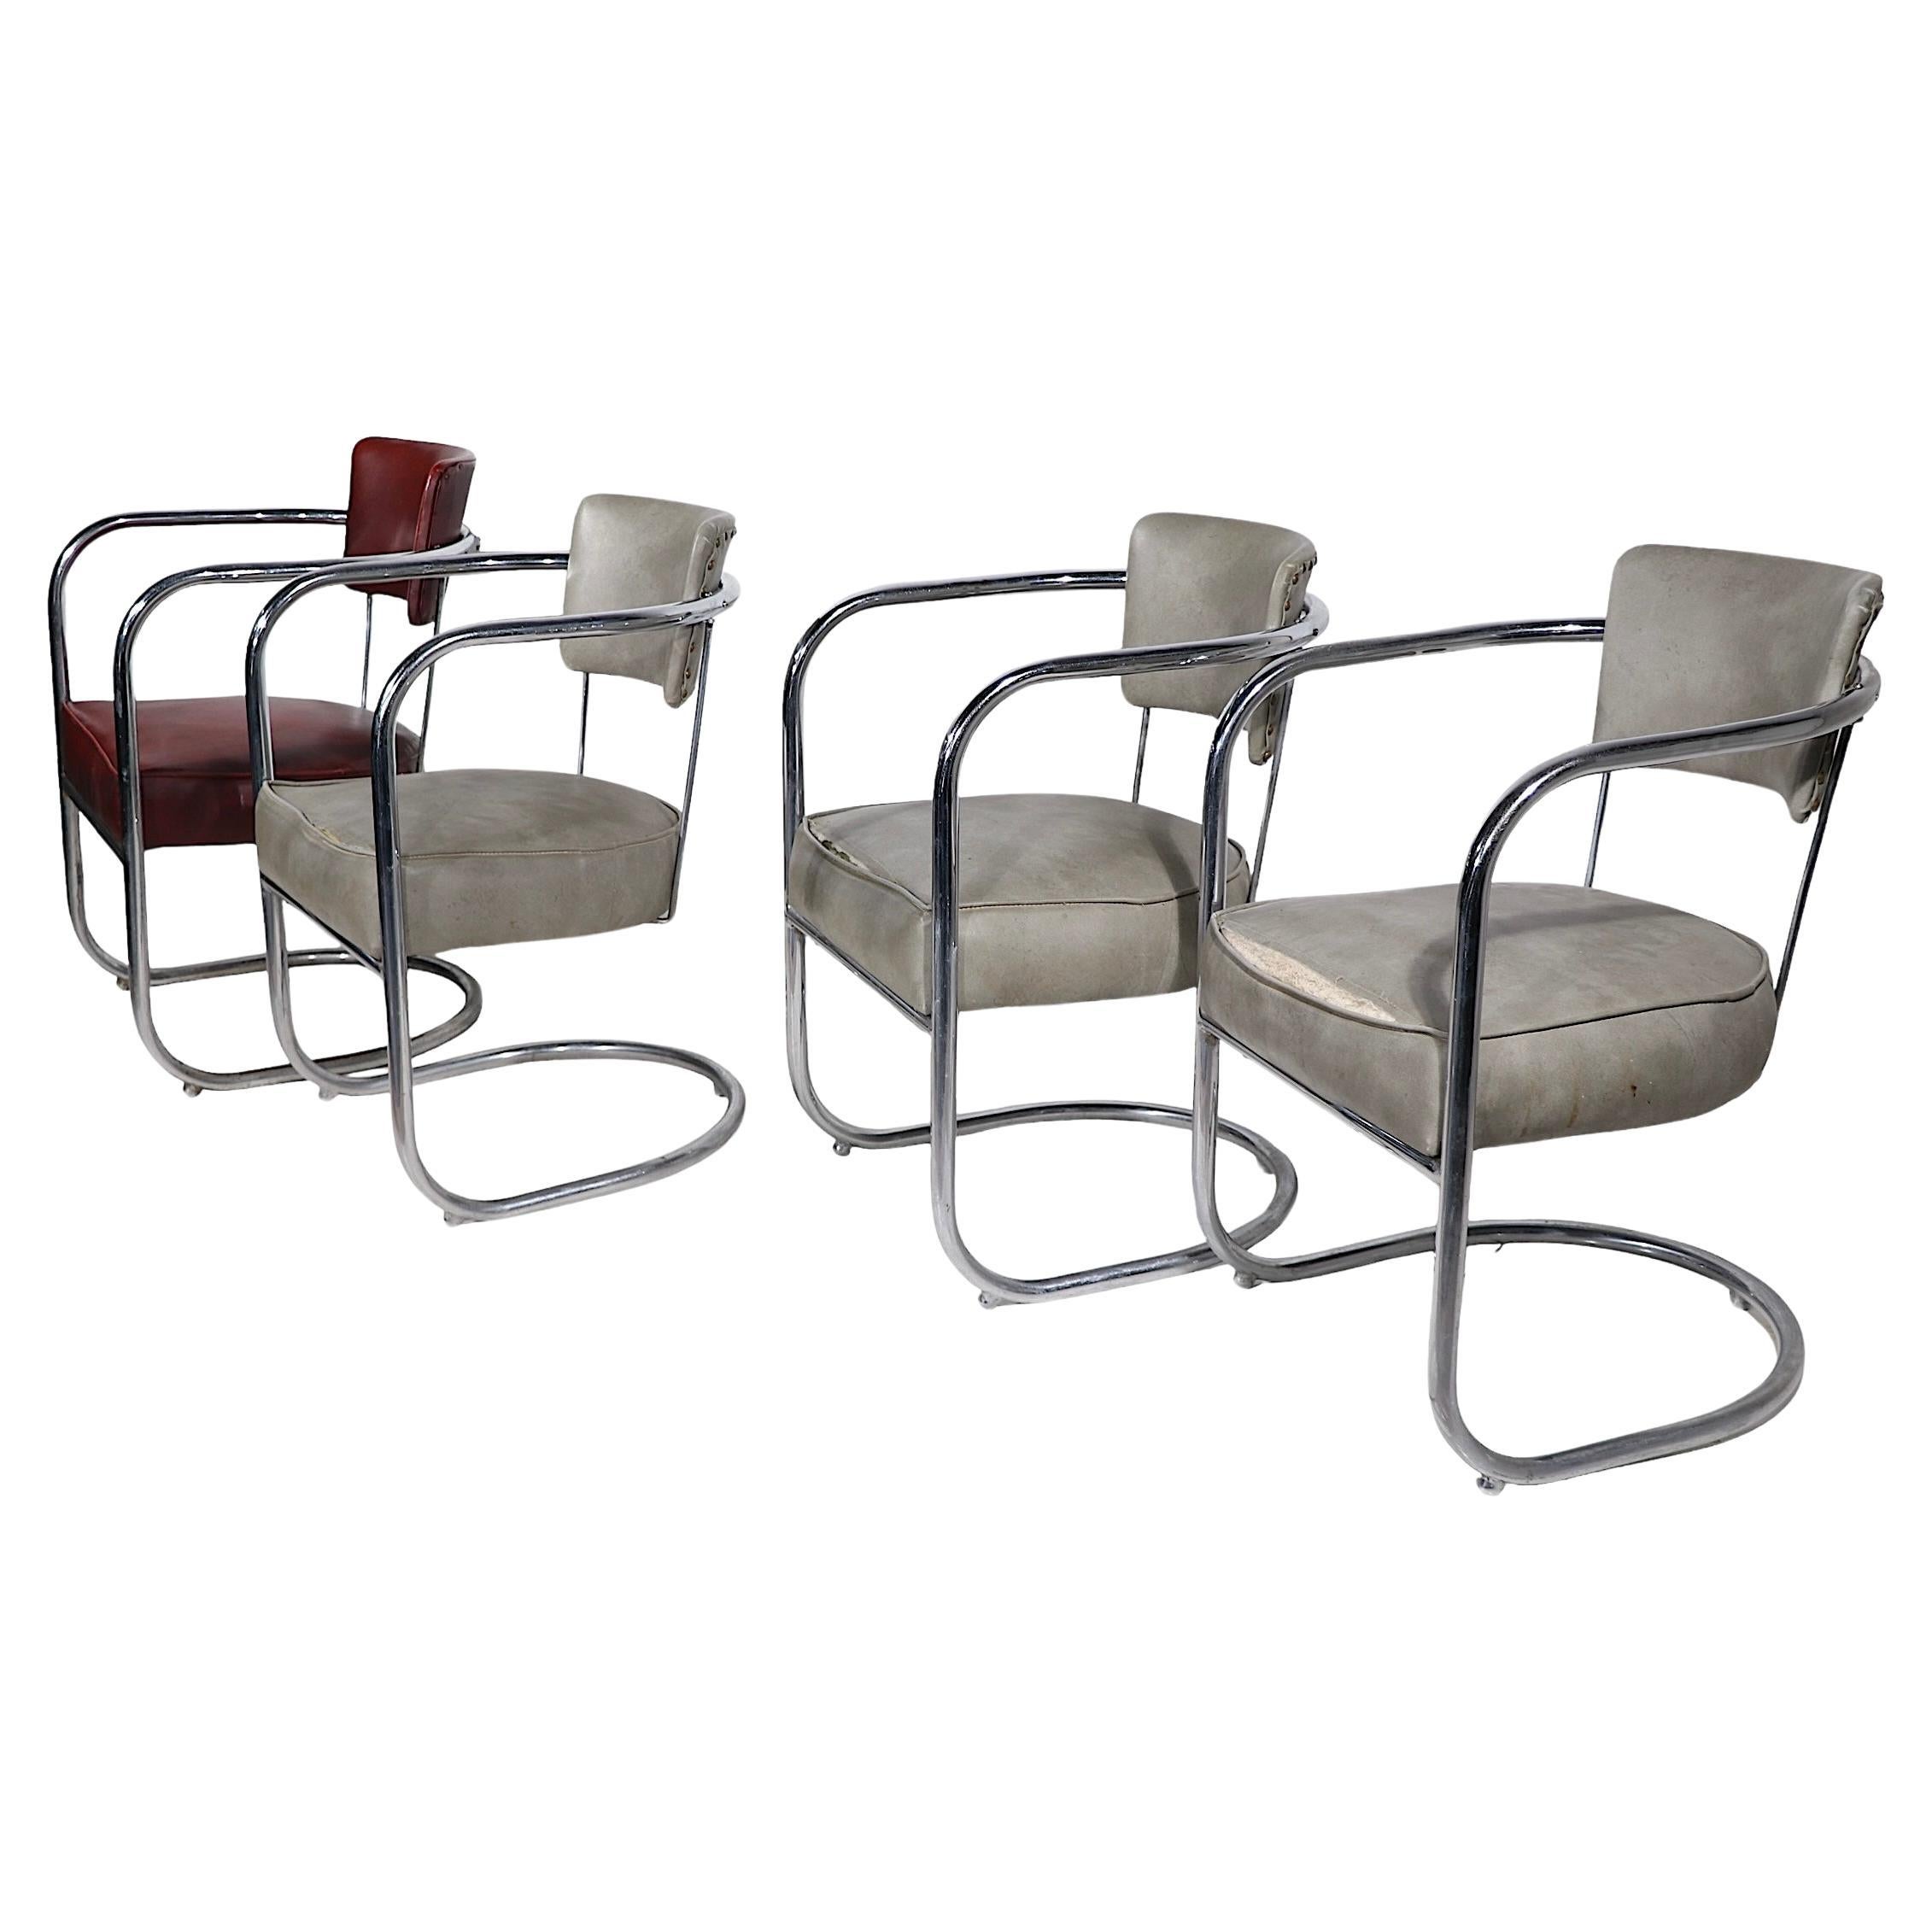 4 Chrome Art Deco Arm Chairs by Lloyd Furniture att. to Kem Weber c.1930's